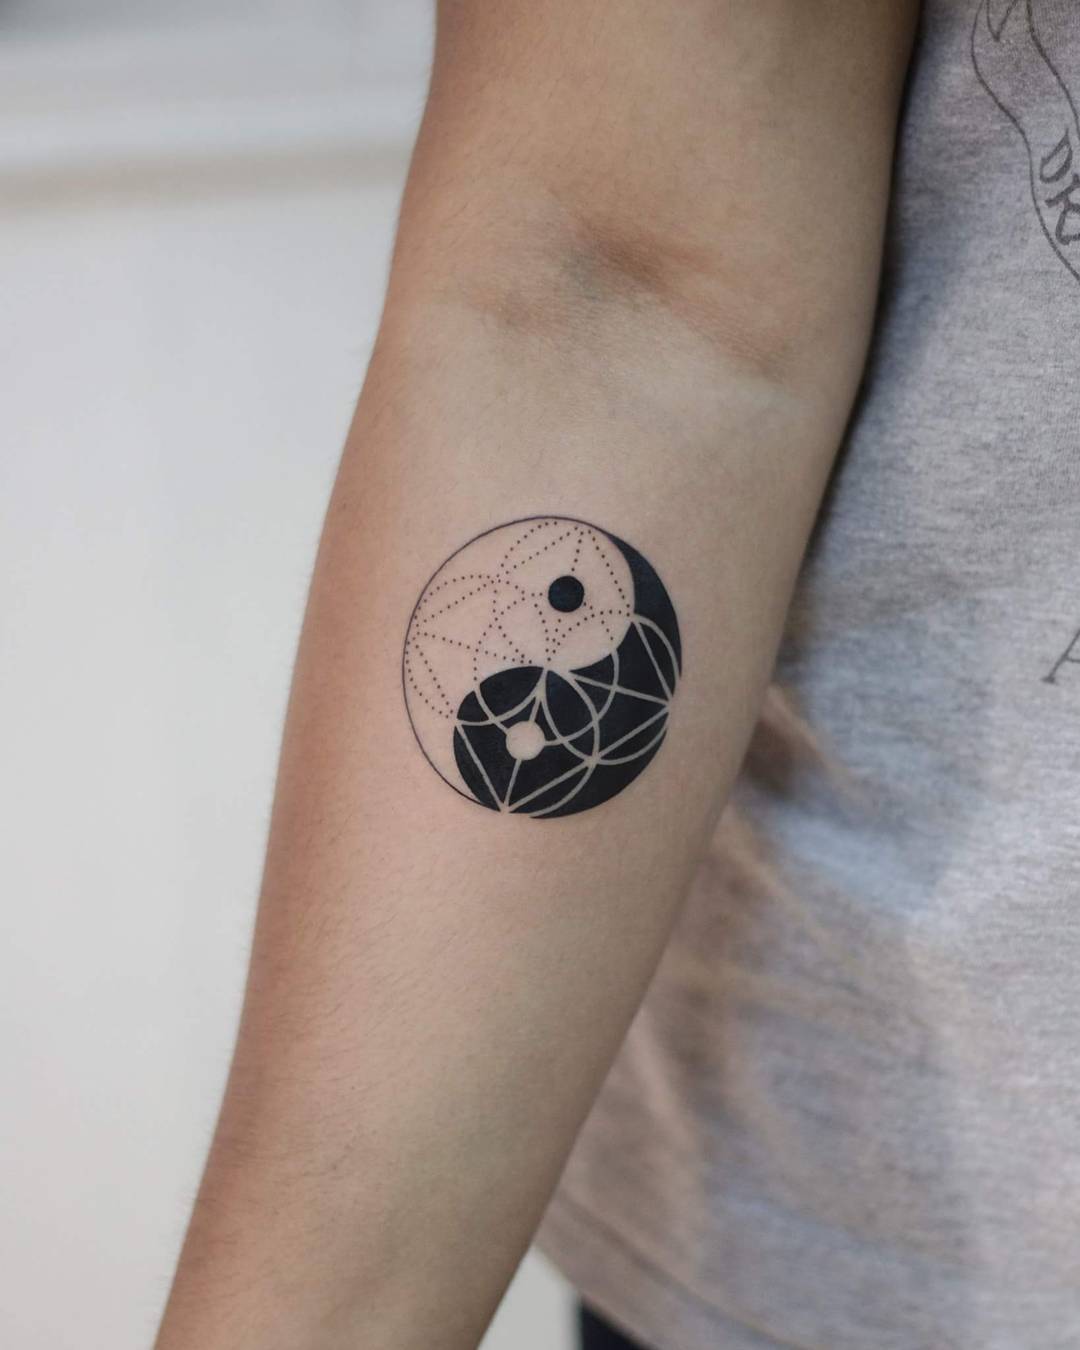 Yin and yang by tattooist Fury Art